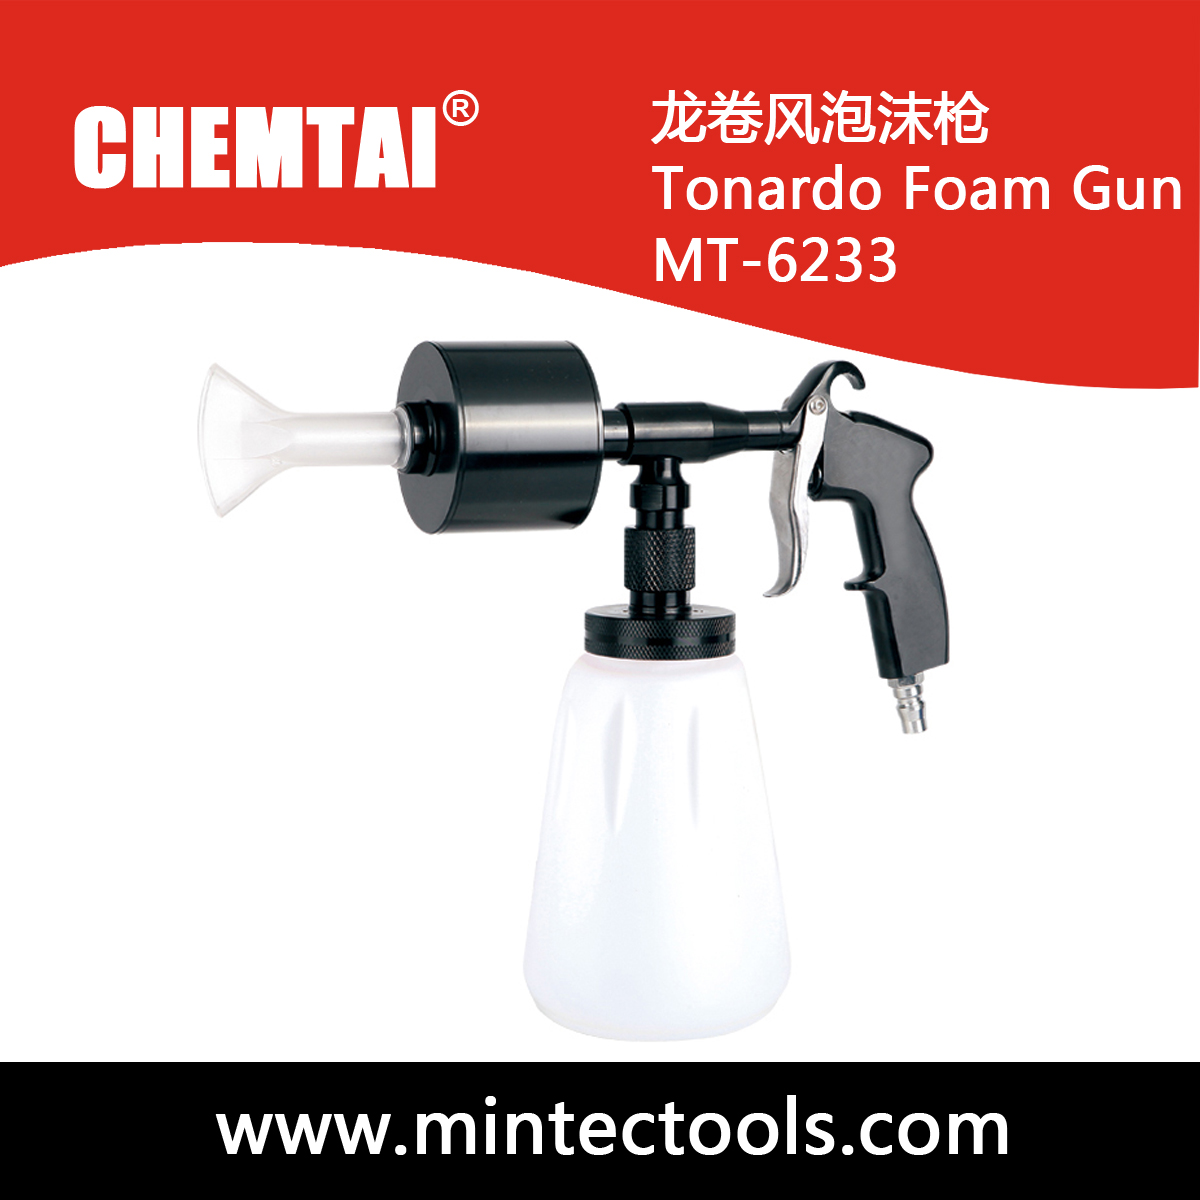 Tornado Foam Gun MT-6233